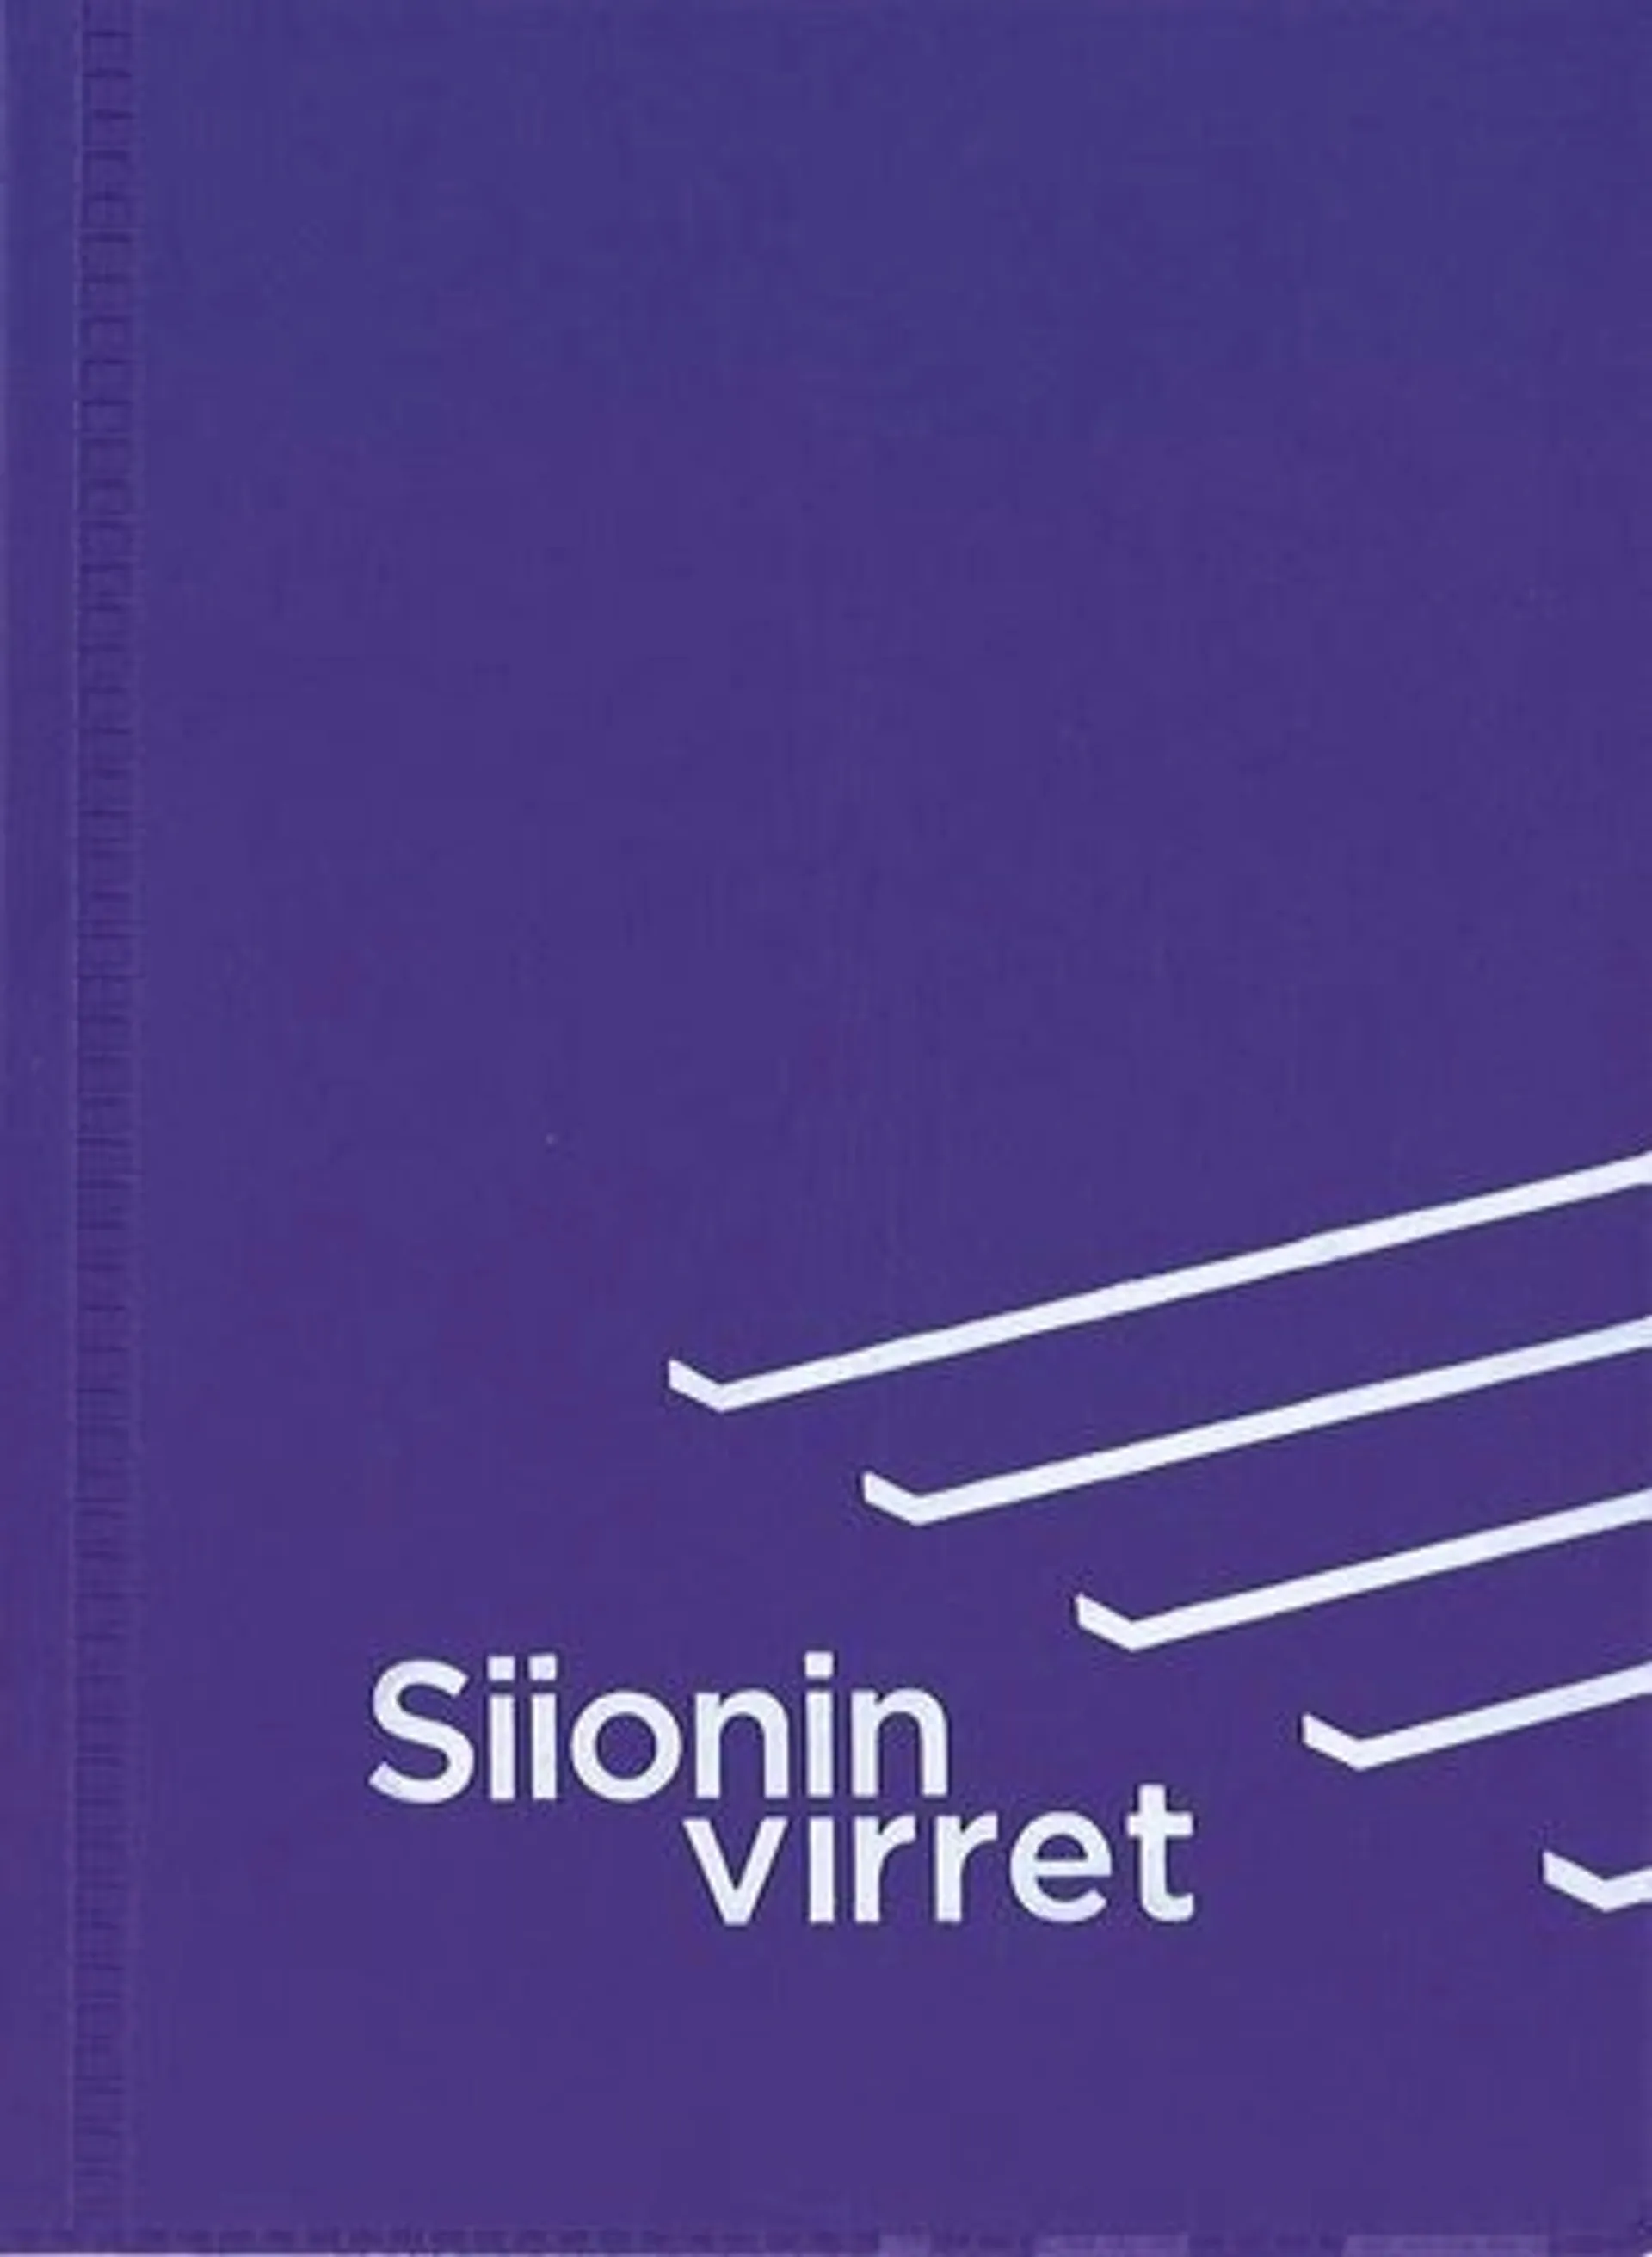 Siionin virret (violetti, nuottipainos, iso teksti, 125x185 mm)